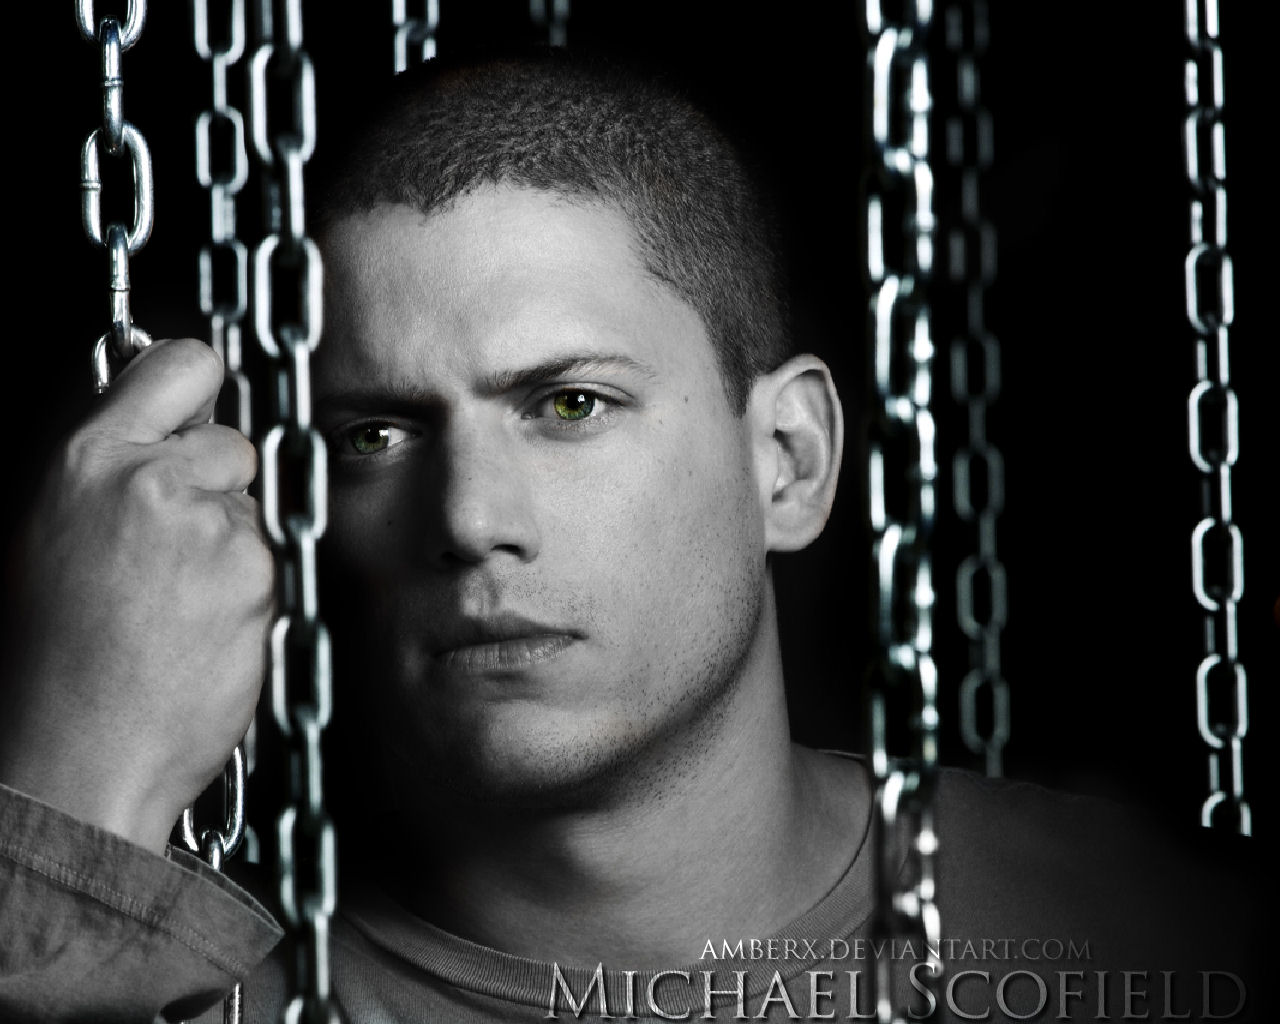 Michael Scofield. by AMBERx on DeviantArt